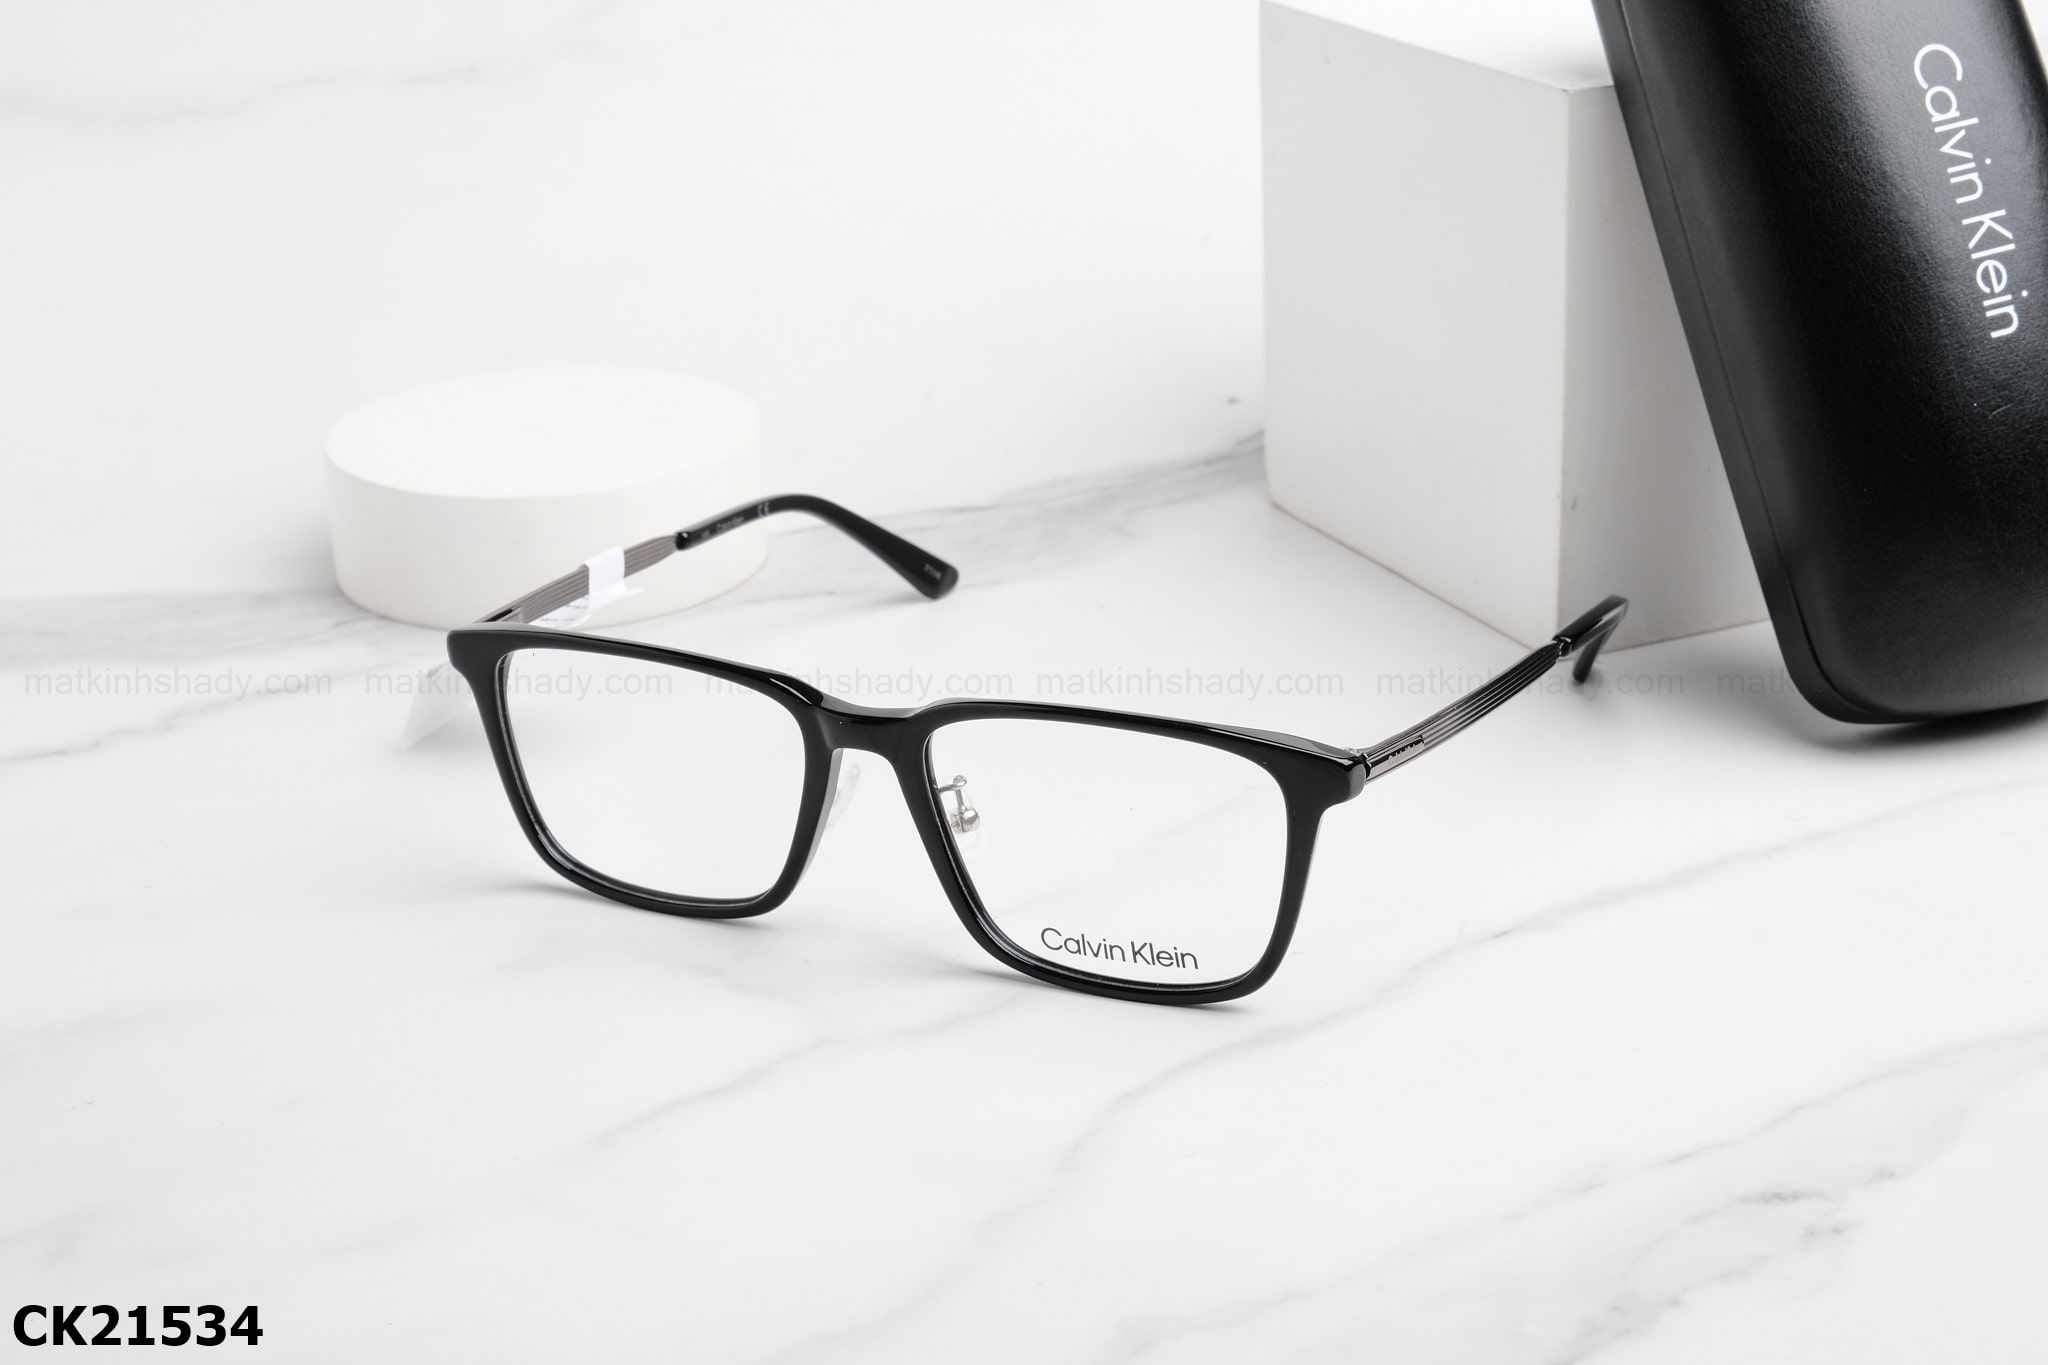  Calvin Klein Eyewear - Glasses - CK21534 